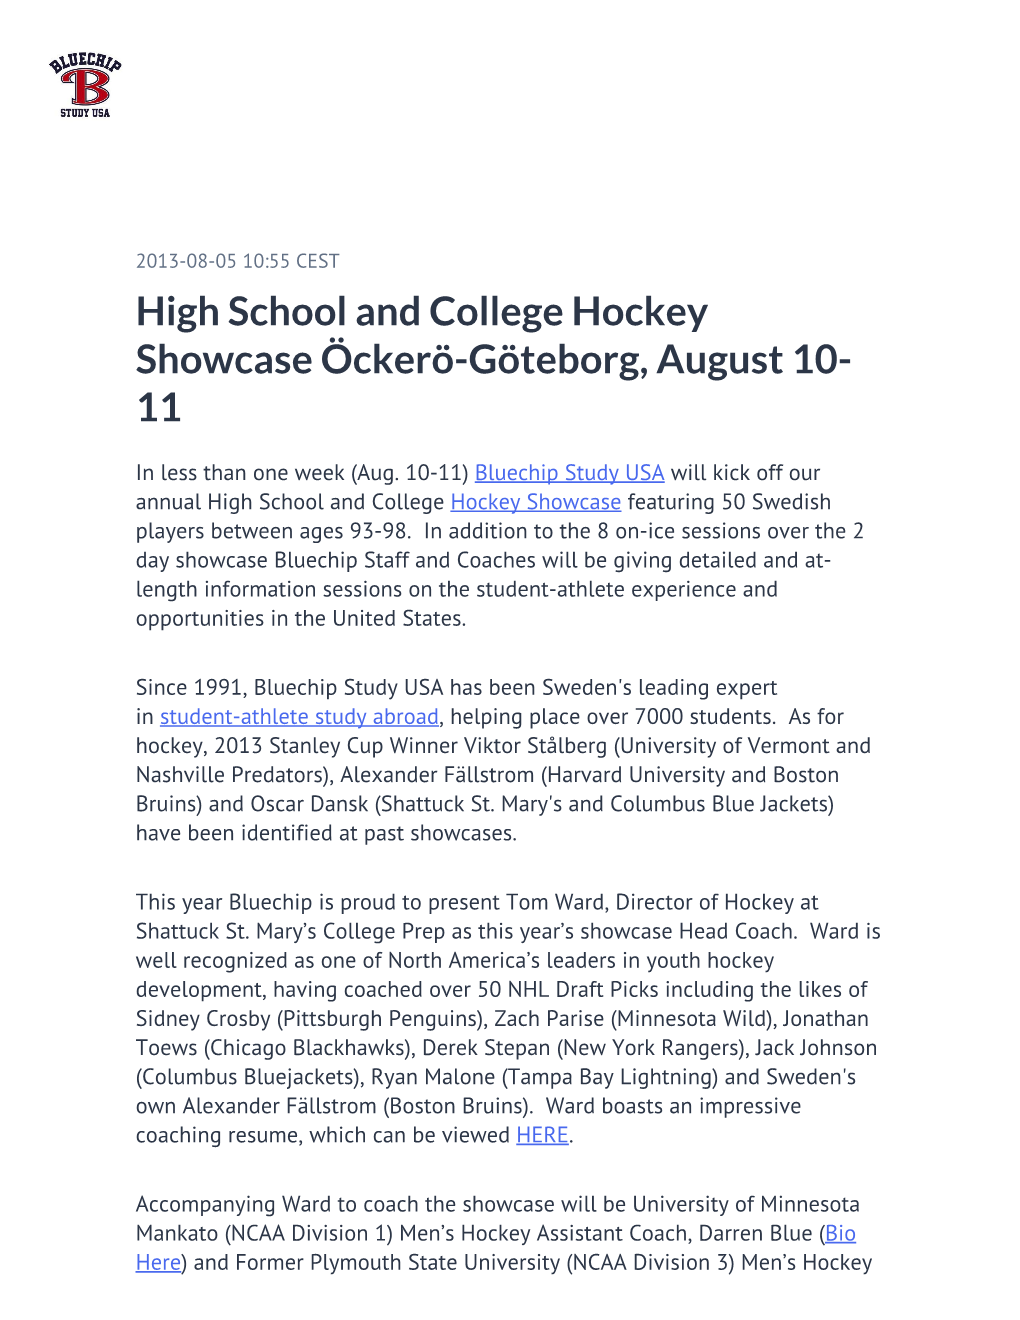 High School and College Hockey Showcase Öckerö-Göteborg, August 10- 11